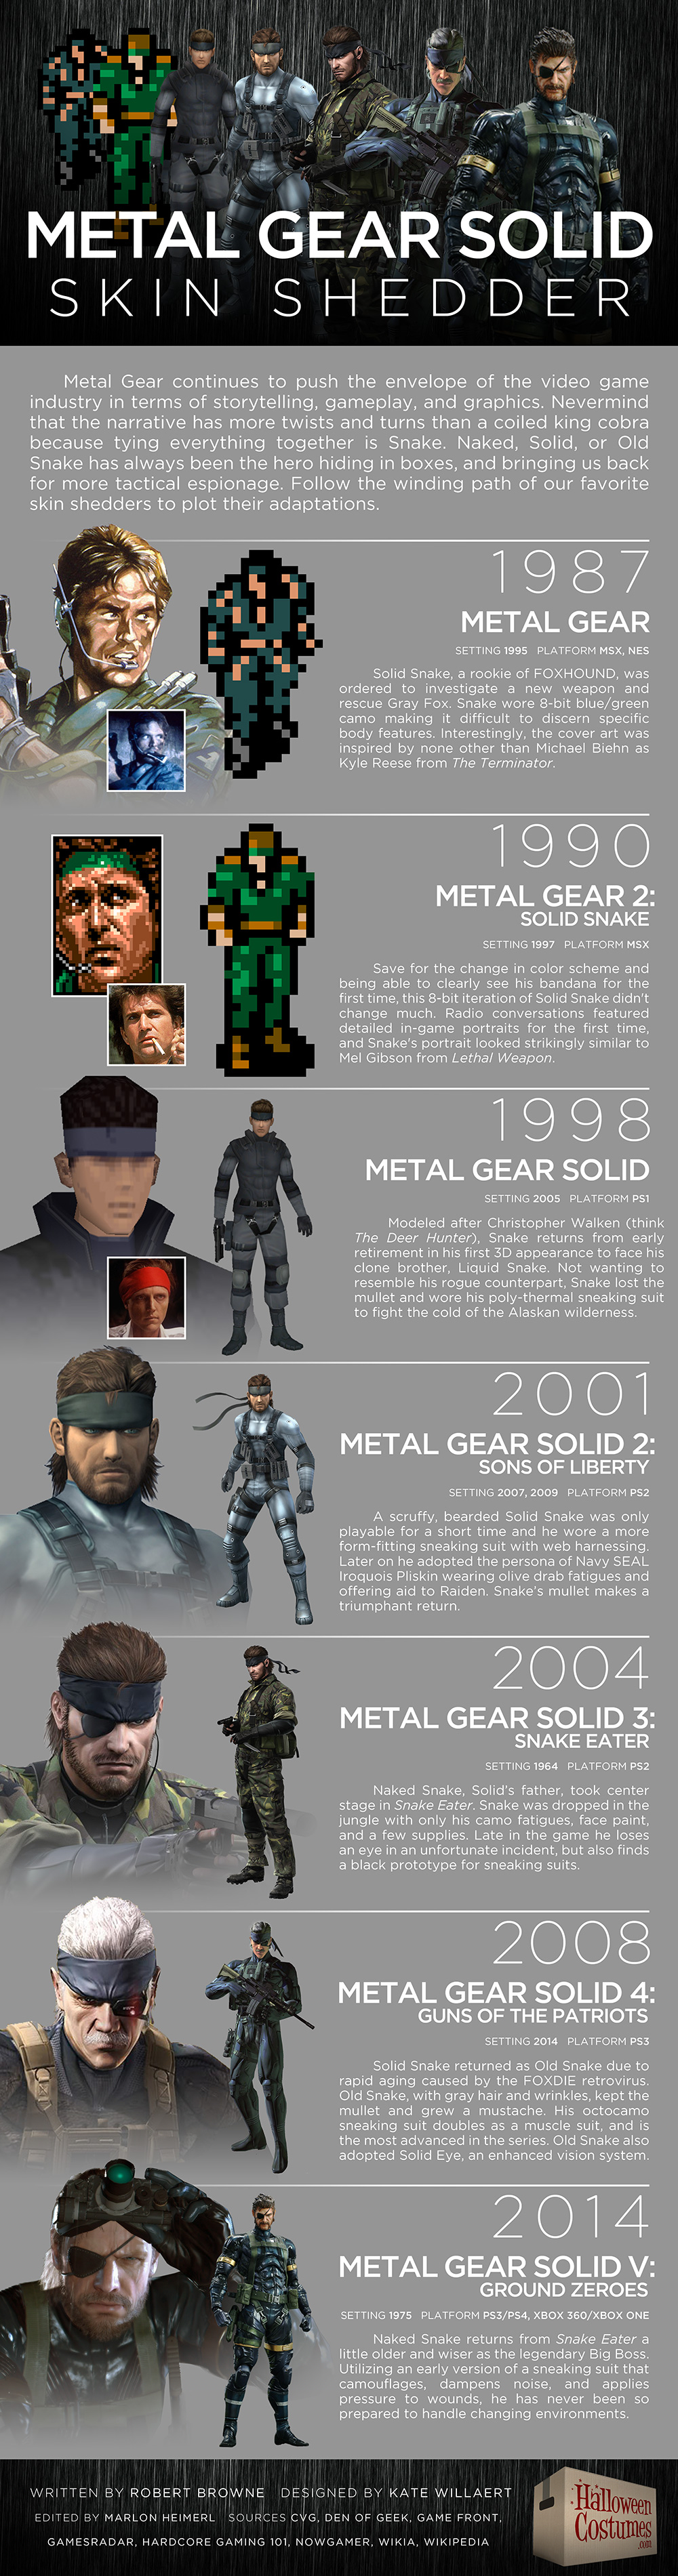 Metal Gear Solid Evolution 1008